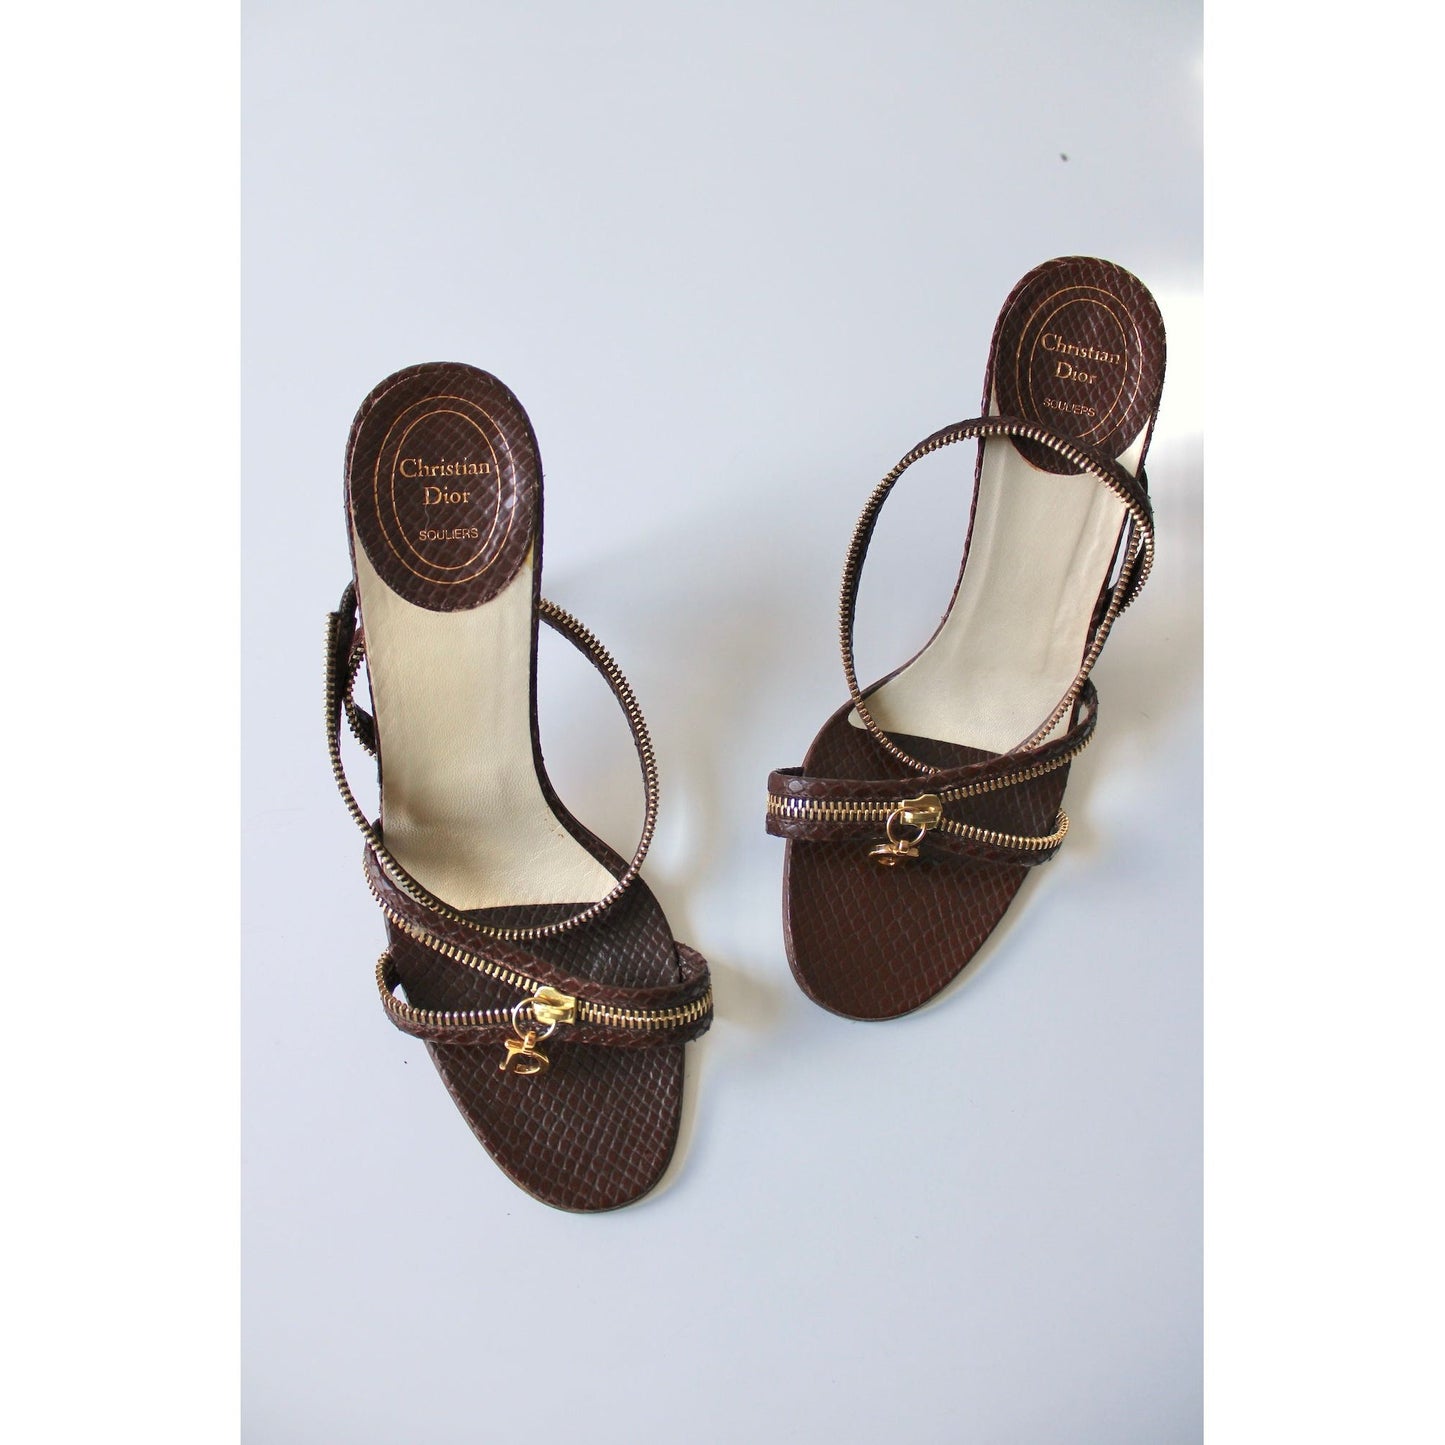 Vintage Dior Souliers Snake Zipper Heels by Galliano (EU 39)